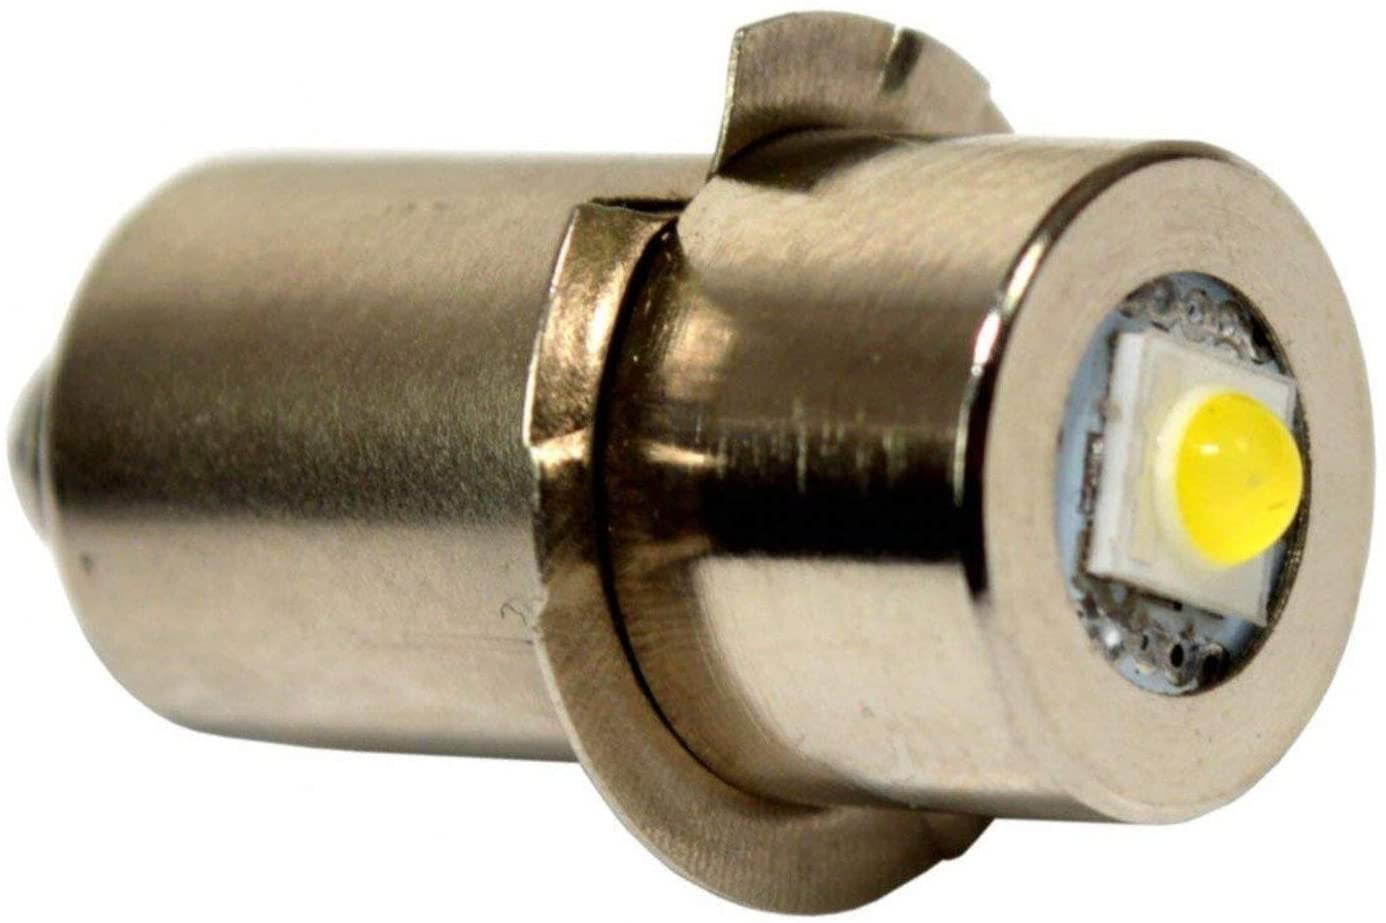 2-Pack HQRP LED Bulb fits Makita 192546-1 A-90261 A90233 ML902 ML702 ML120 ML180